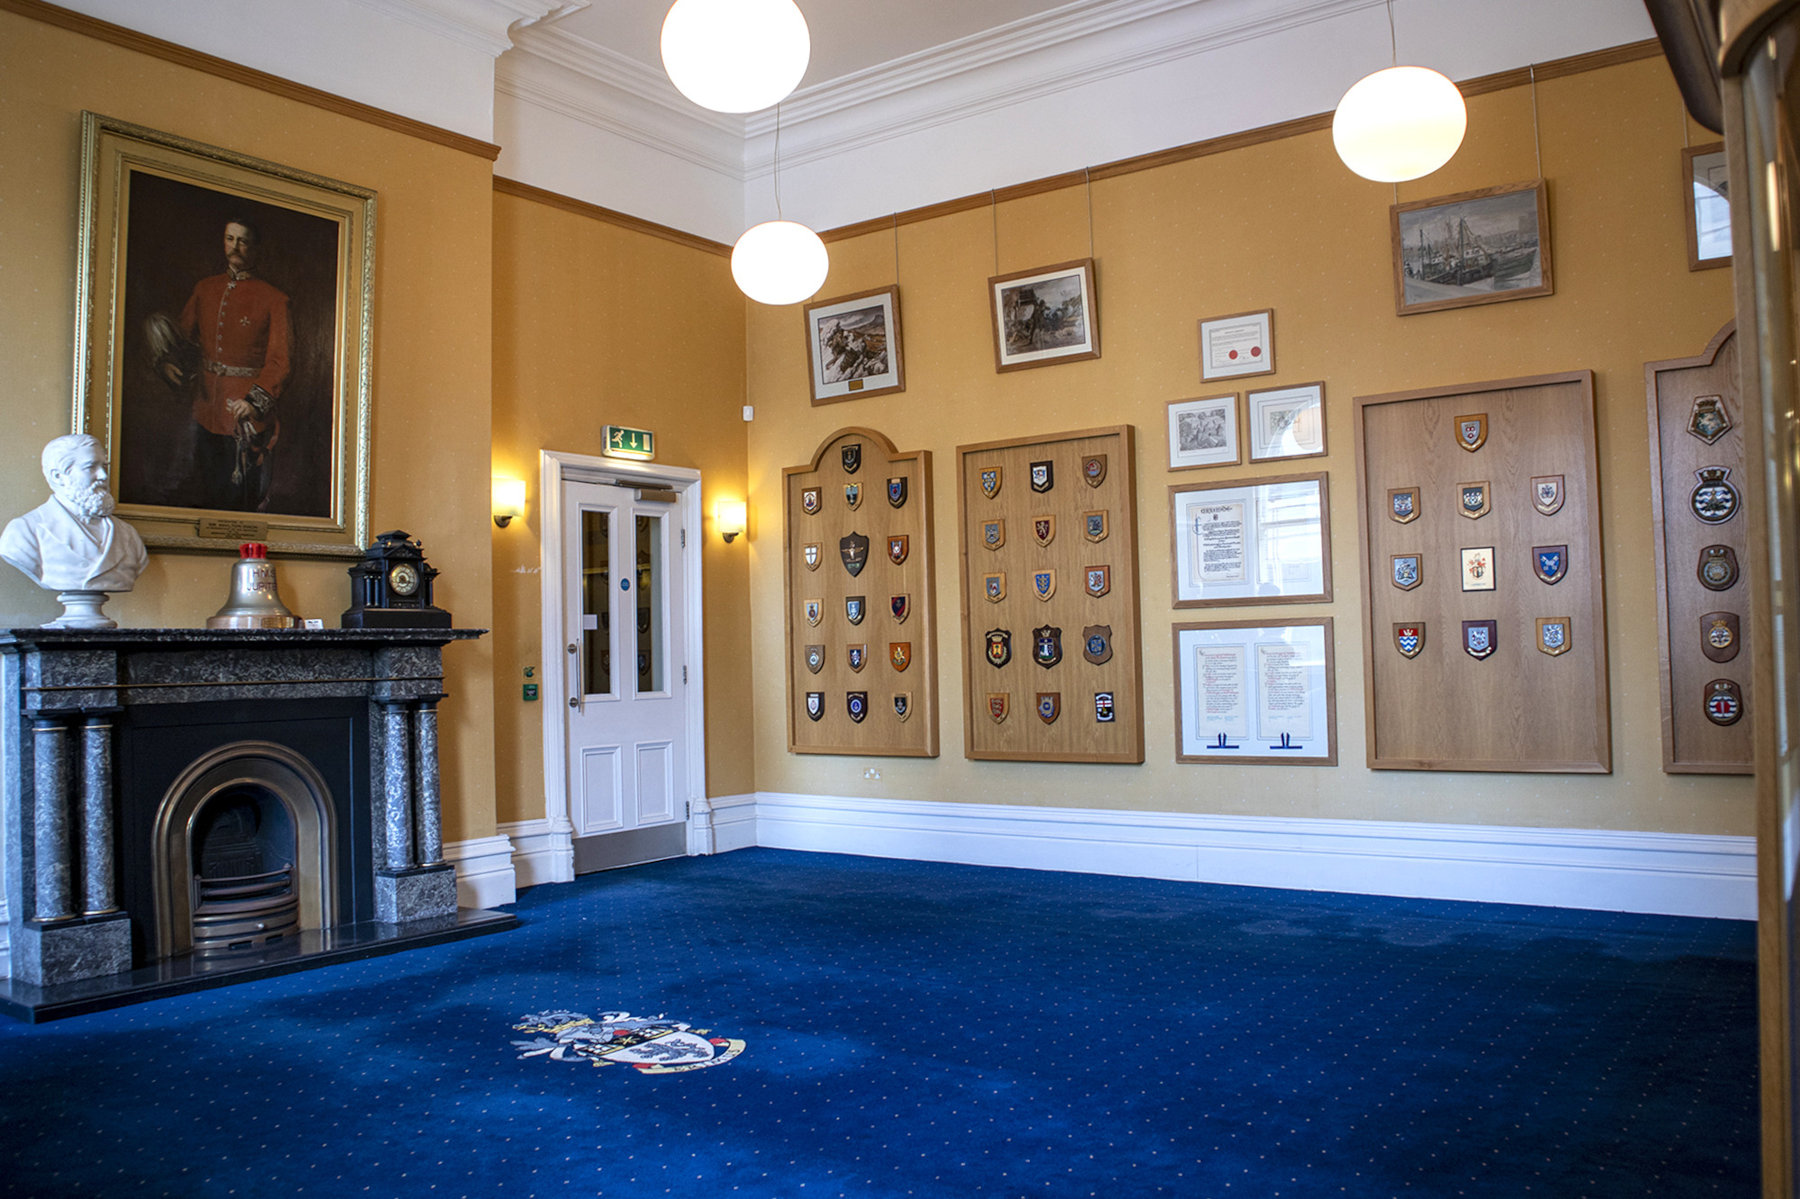 Middlesbrough's historic civic suite